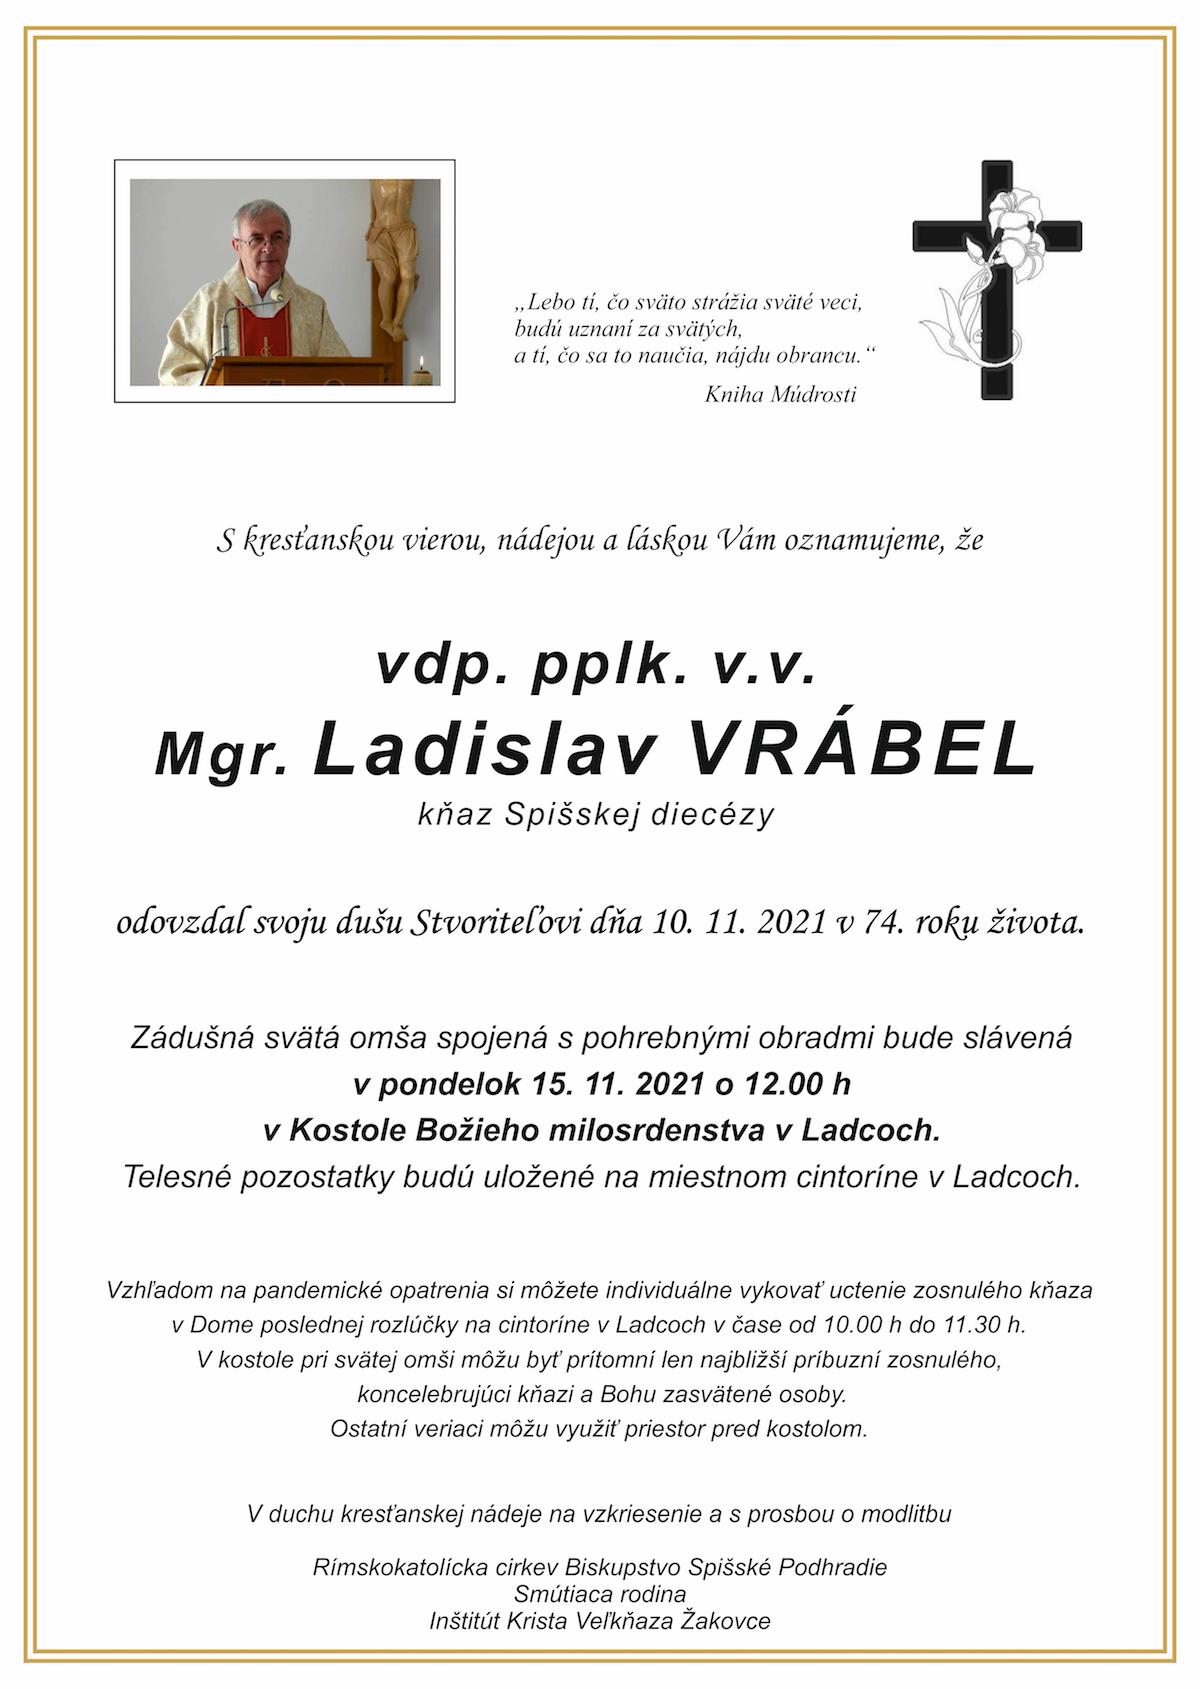 Ladislav Vrabel, parte